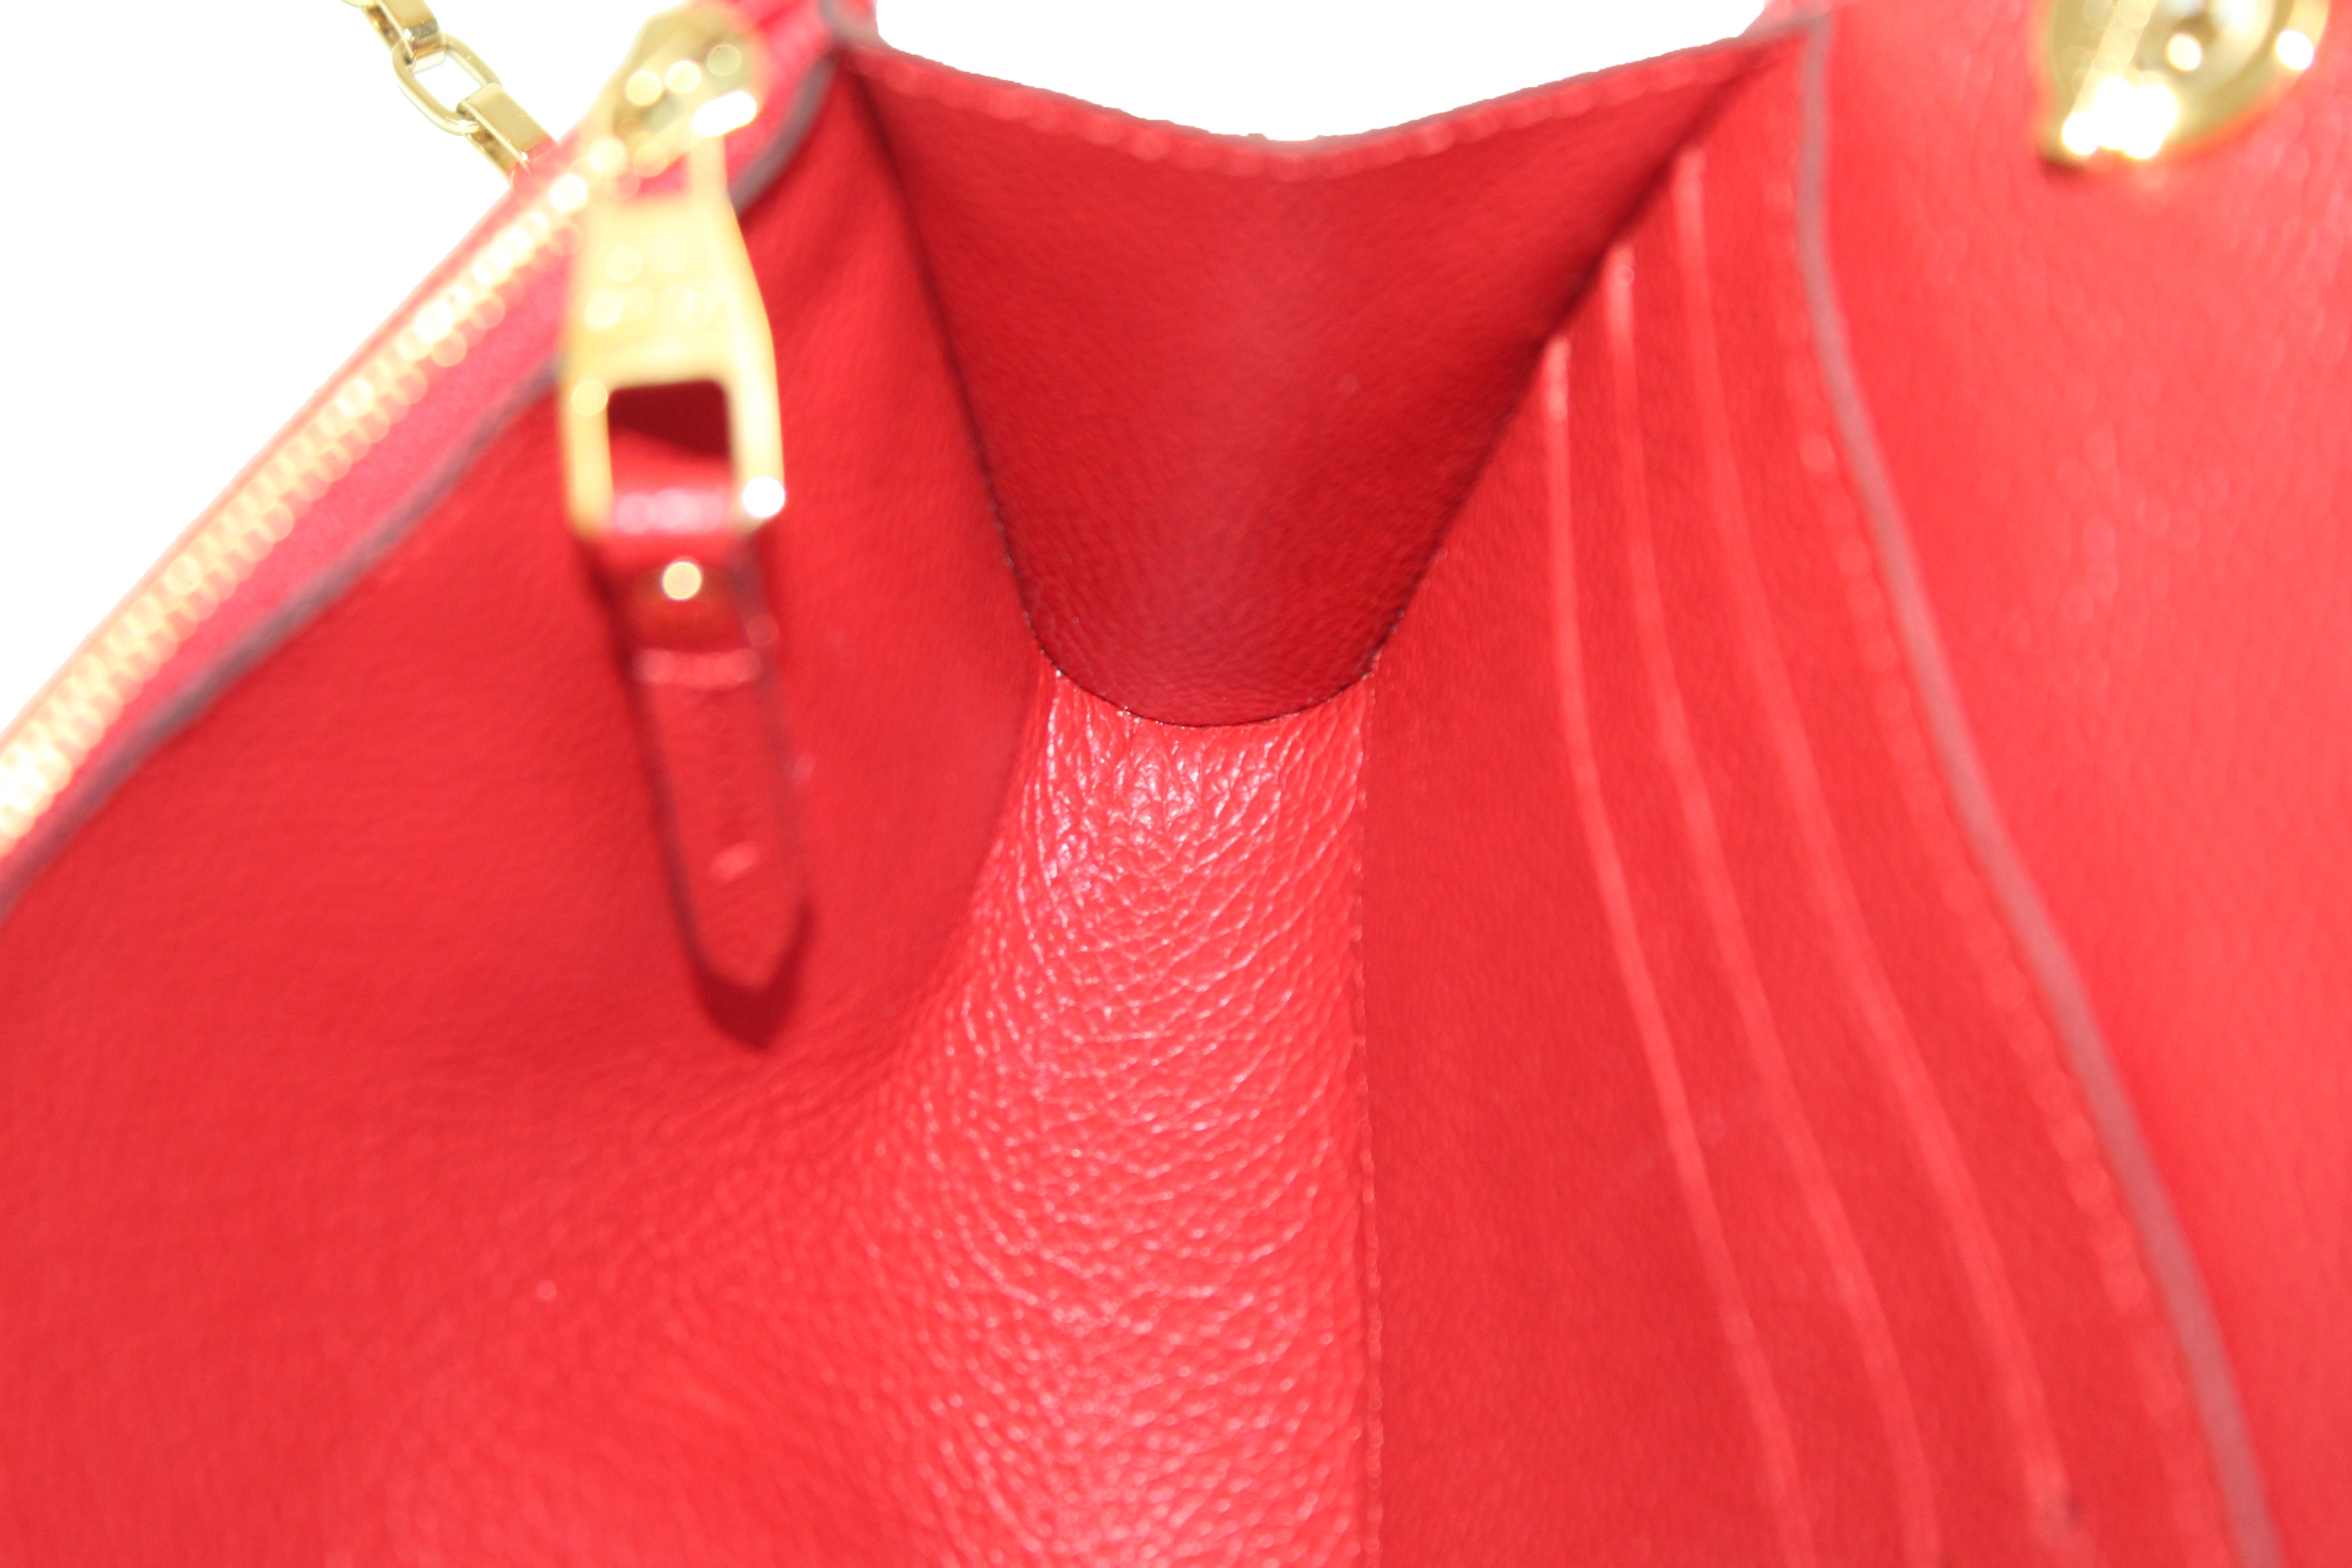 Louis Vuitton Red Empreinte Leather Saint-Germain Pochette With